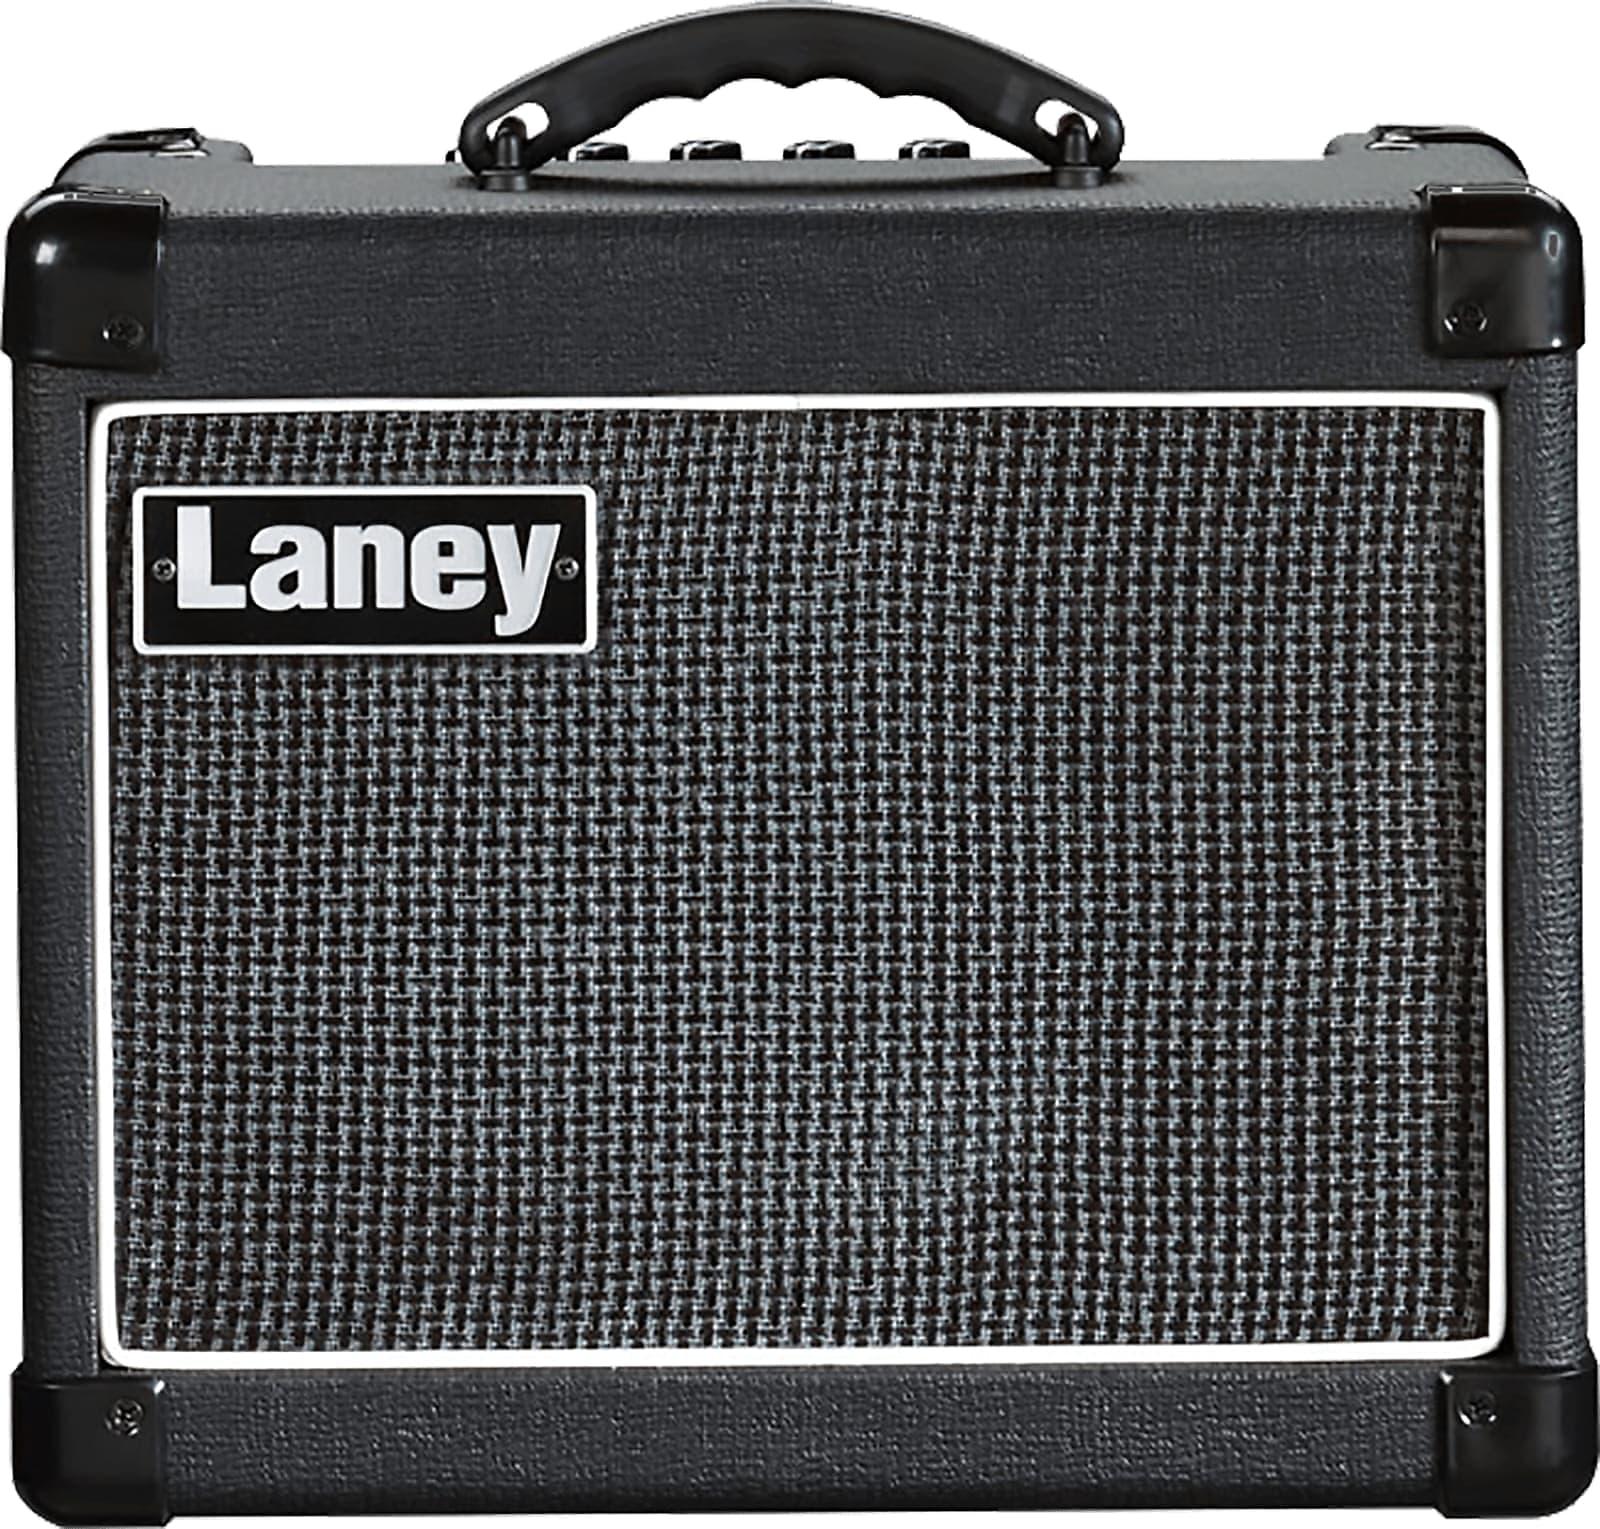 Laney - Combo Guitarra Electrica Vintage, 10 W 1 x 6.5 Mod.LG12_98